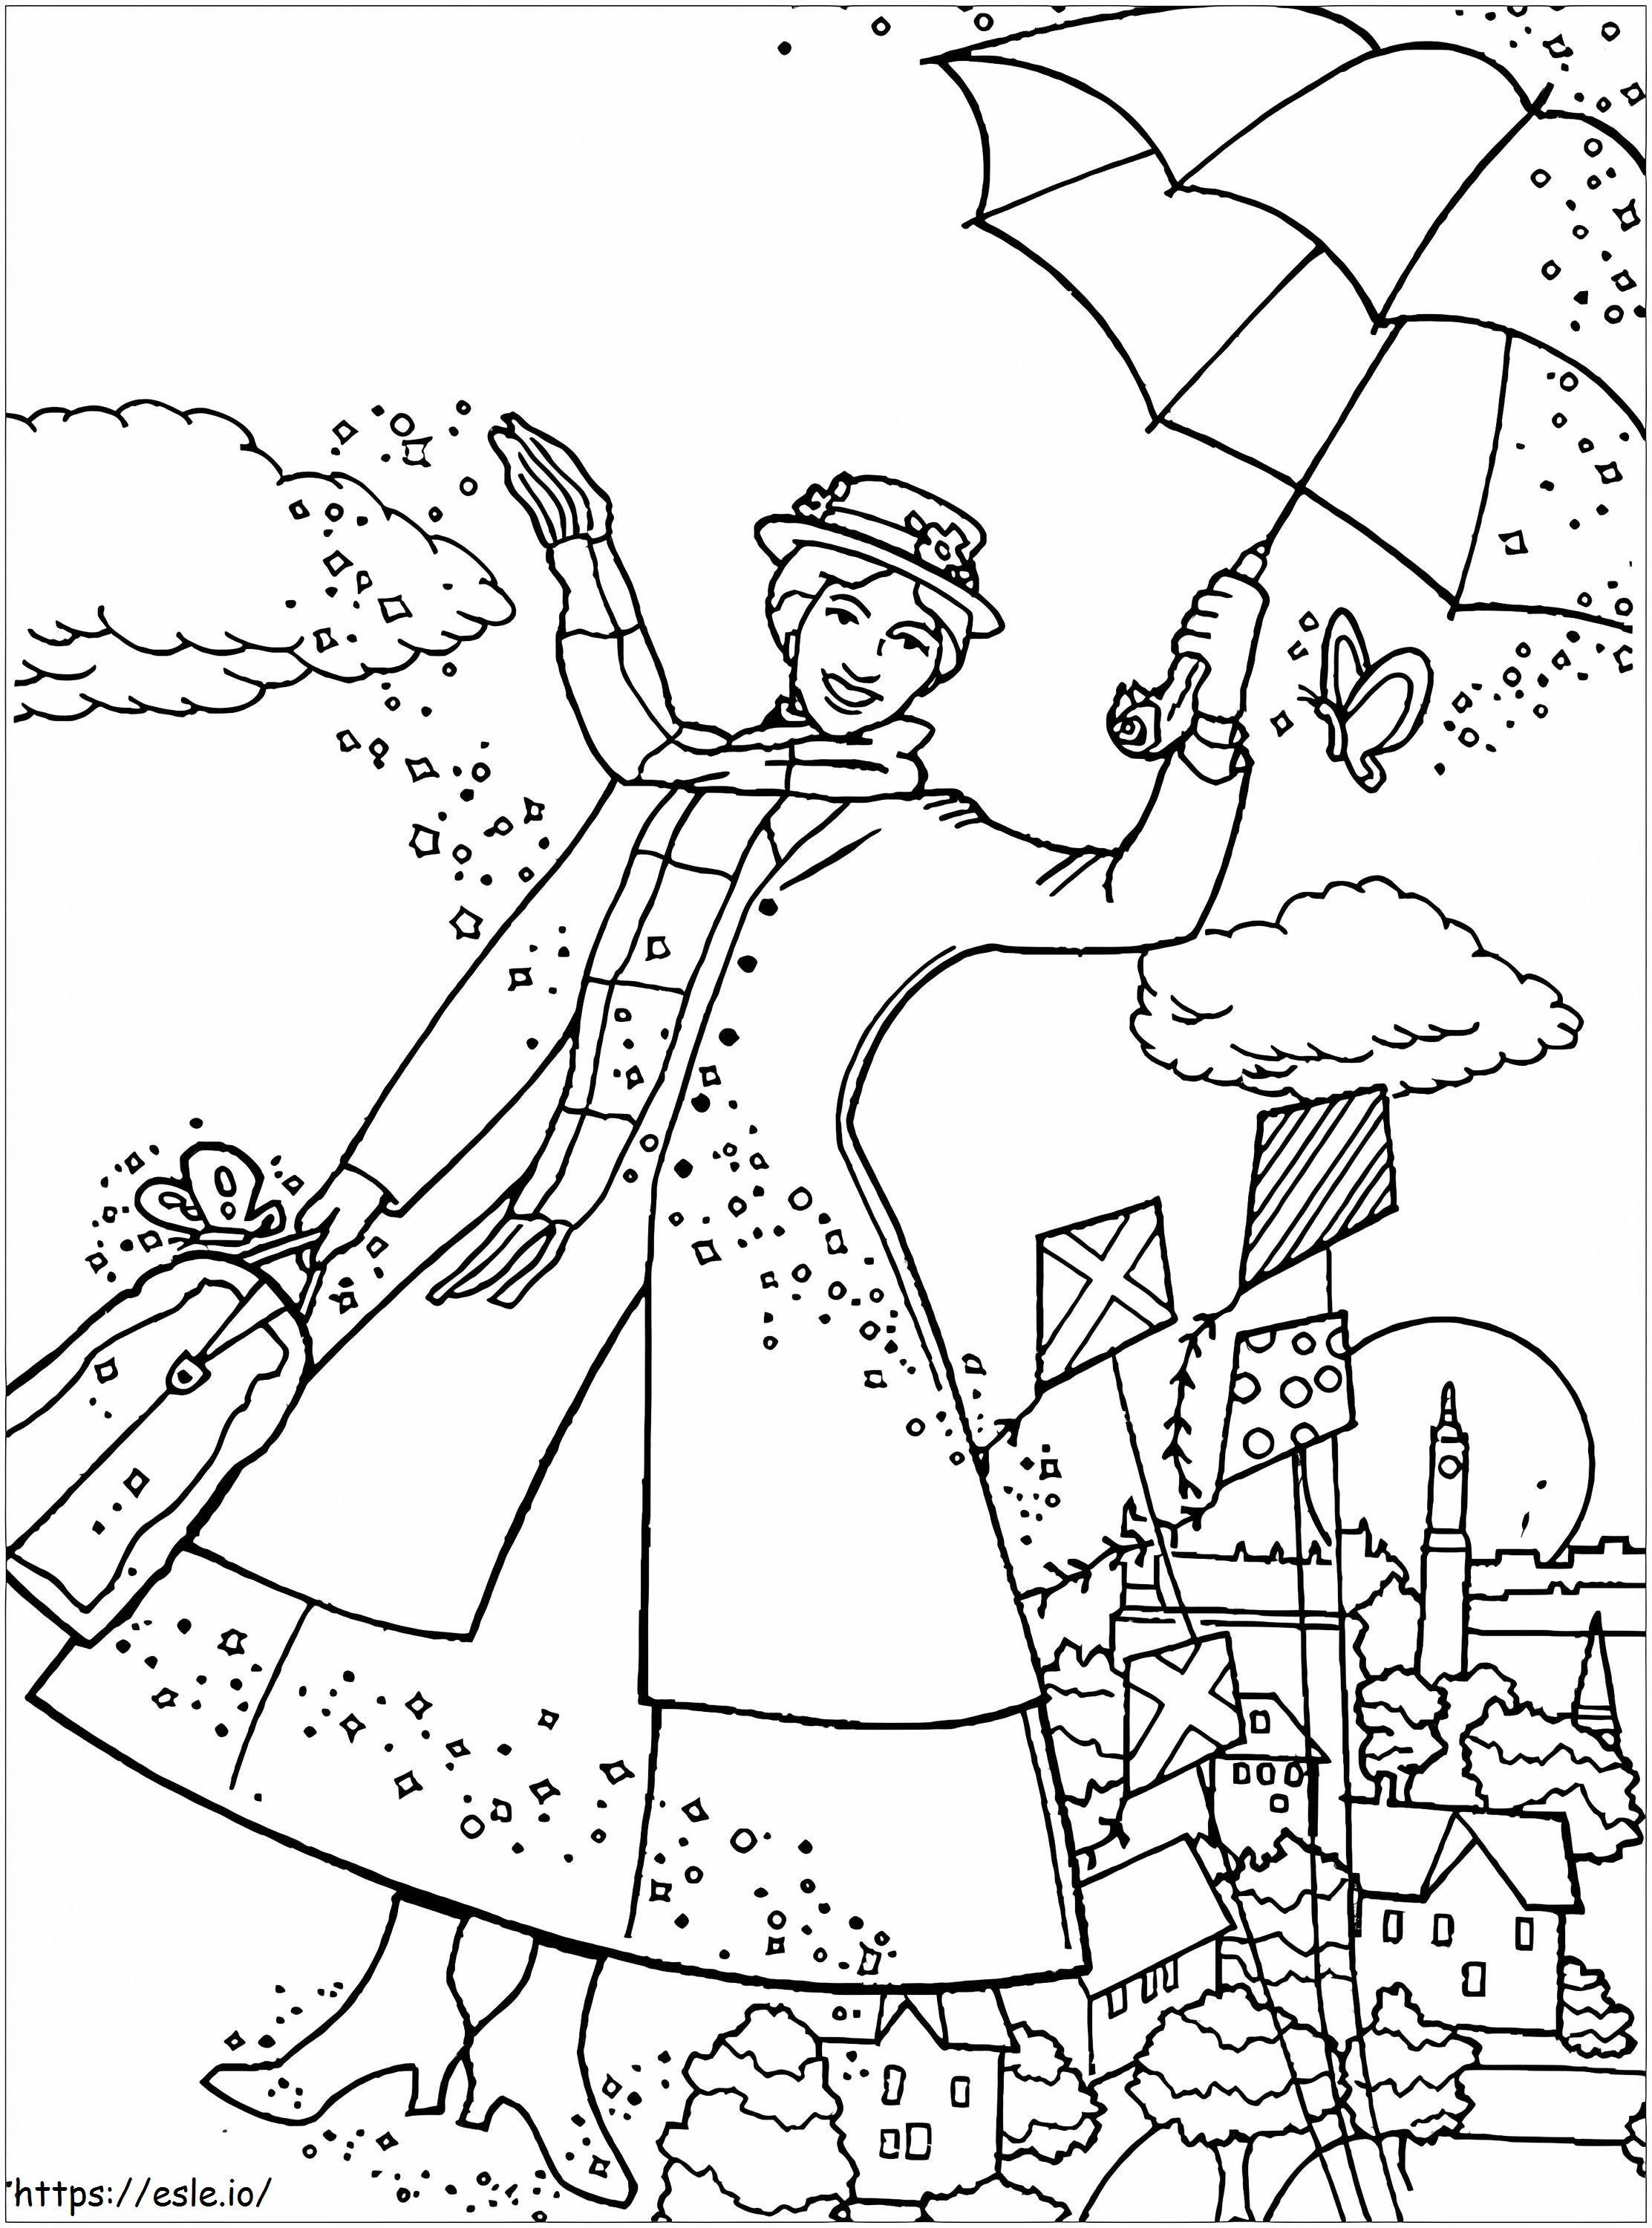 Prosta Mary Poppins kolorowanka